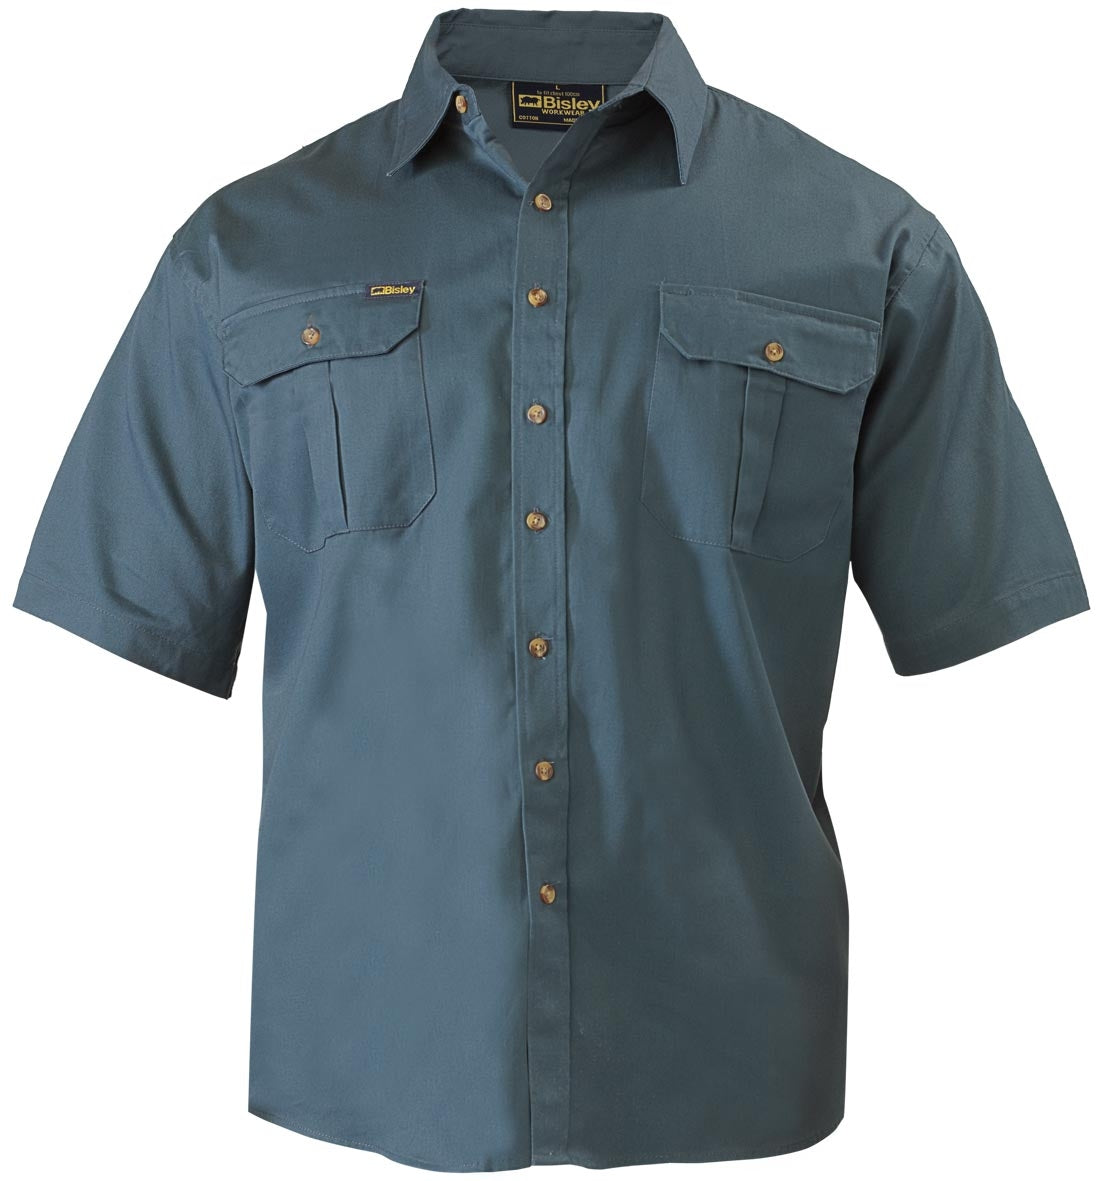 Bisley Original Cotton Drill Work Shirt - Short Sleeve S Bottle Green Workwear by Bisley | The Bloke Shop